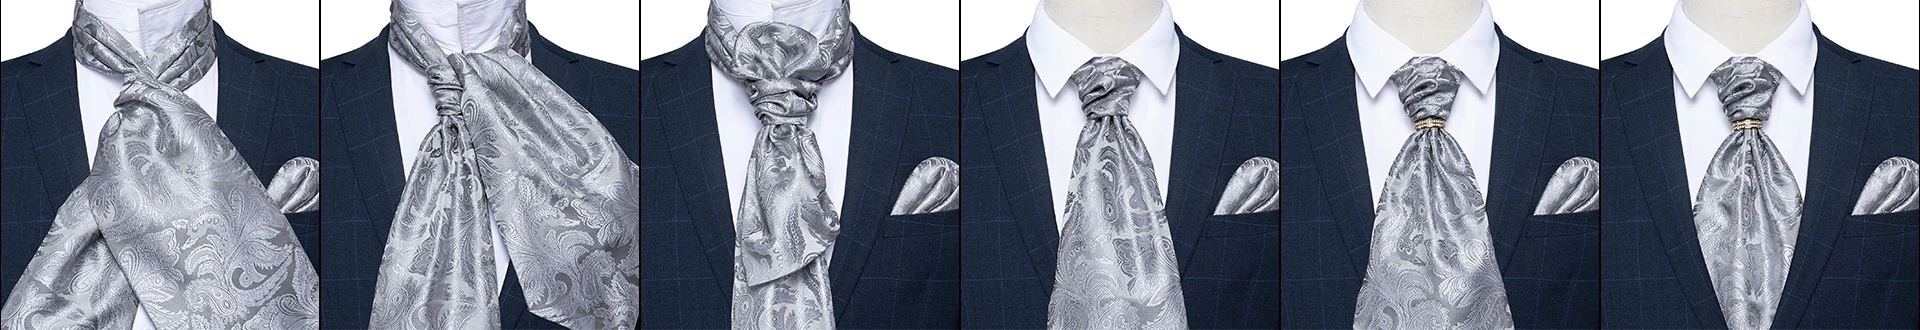 Men Suit Vest silver Paisley Floral Silk Wedding Waistcoat Men Ascot Tie Pocket Square Necktie Ring Sleeveless Jacket DiBanGu blazer suit